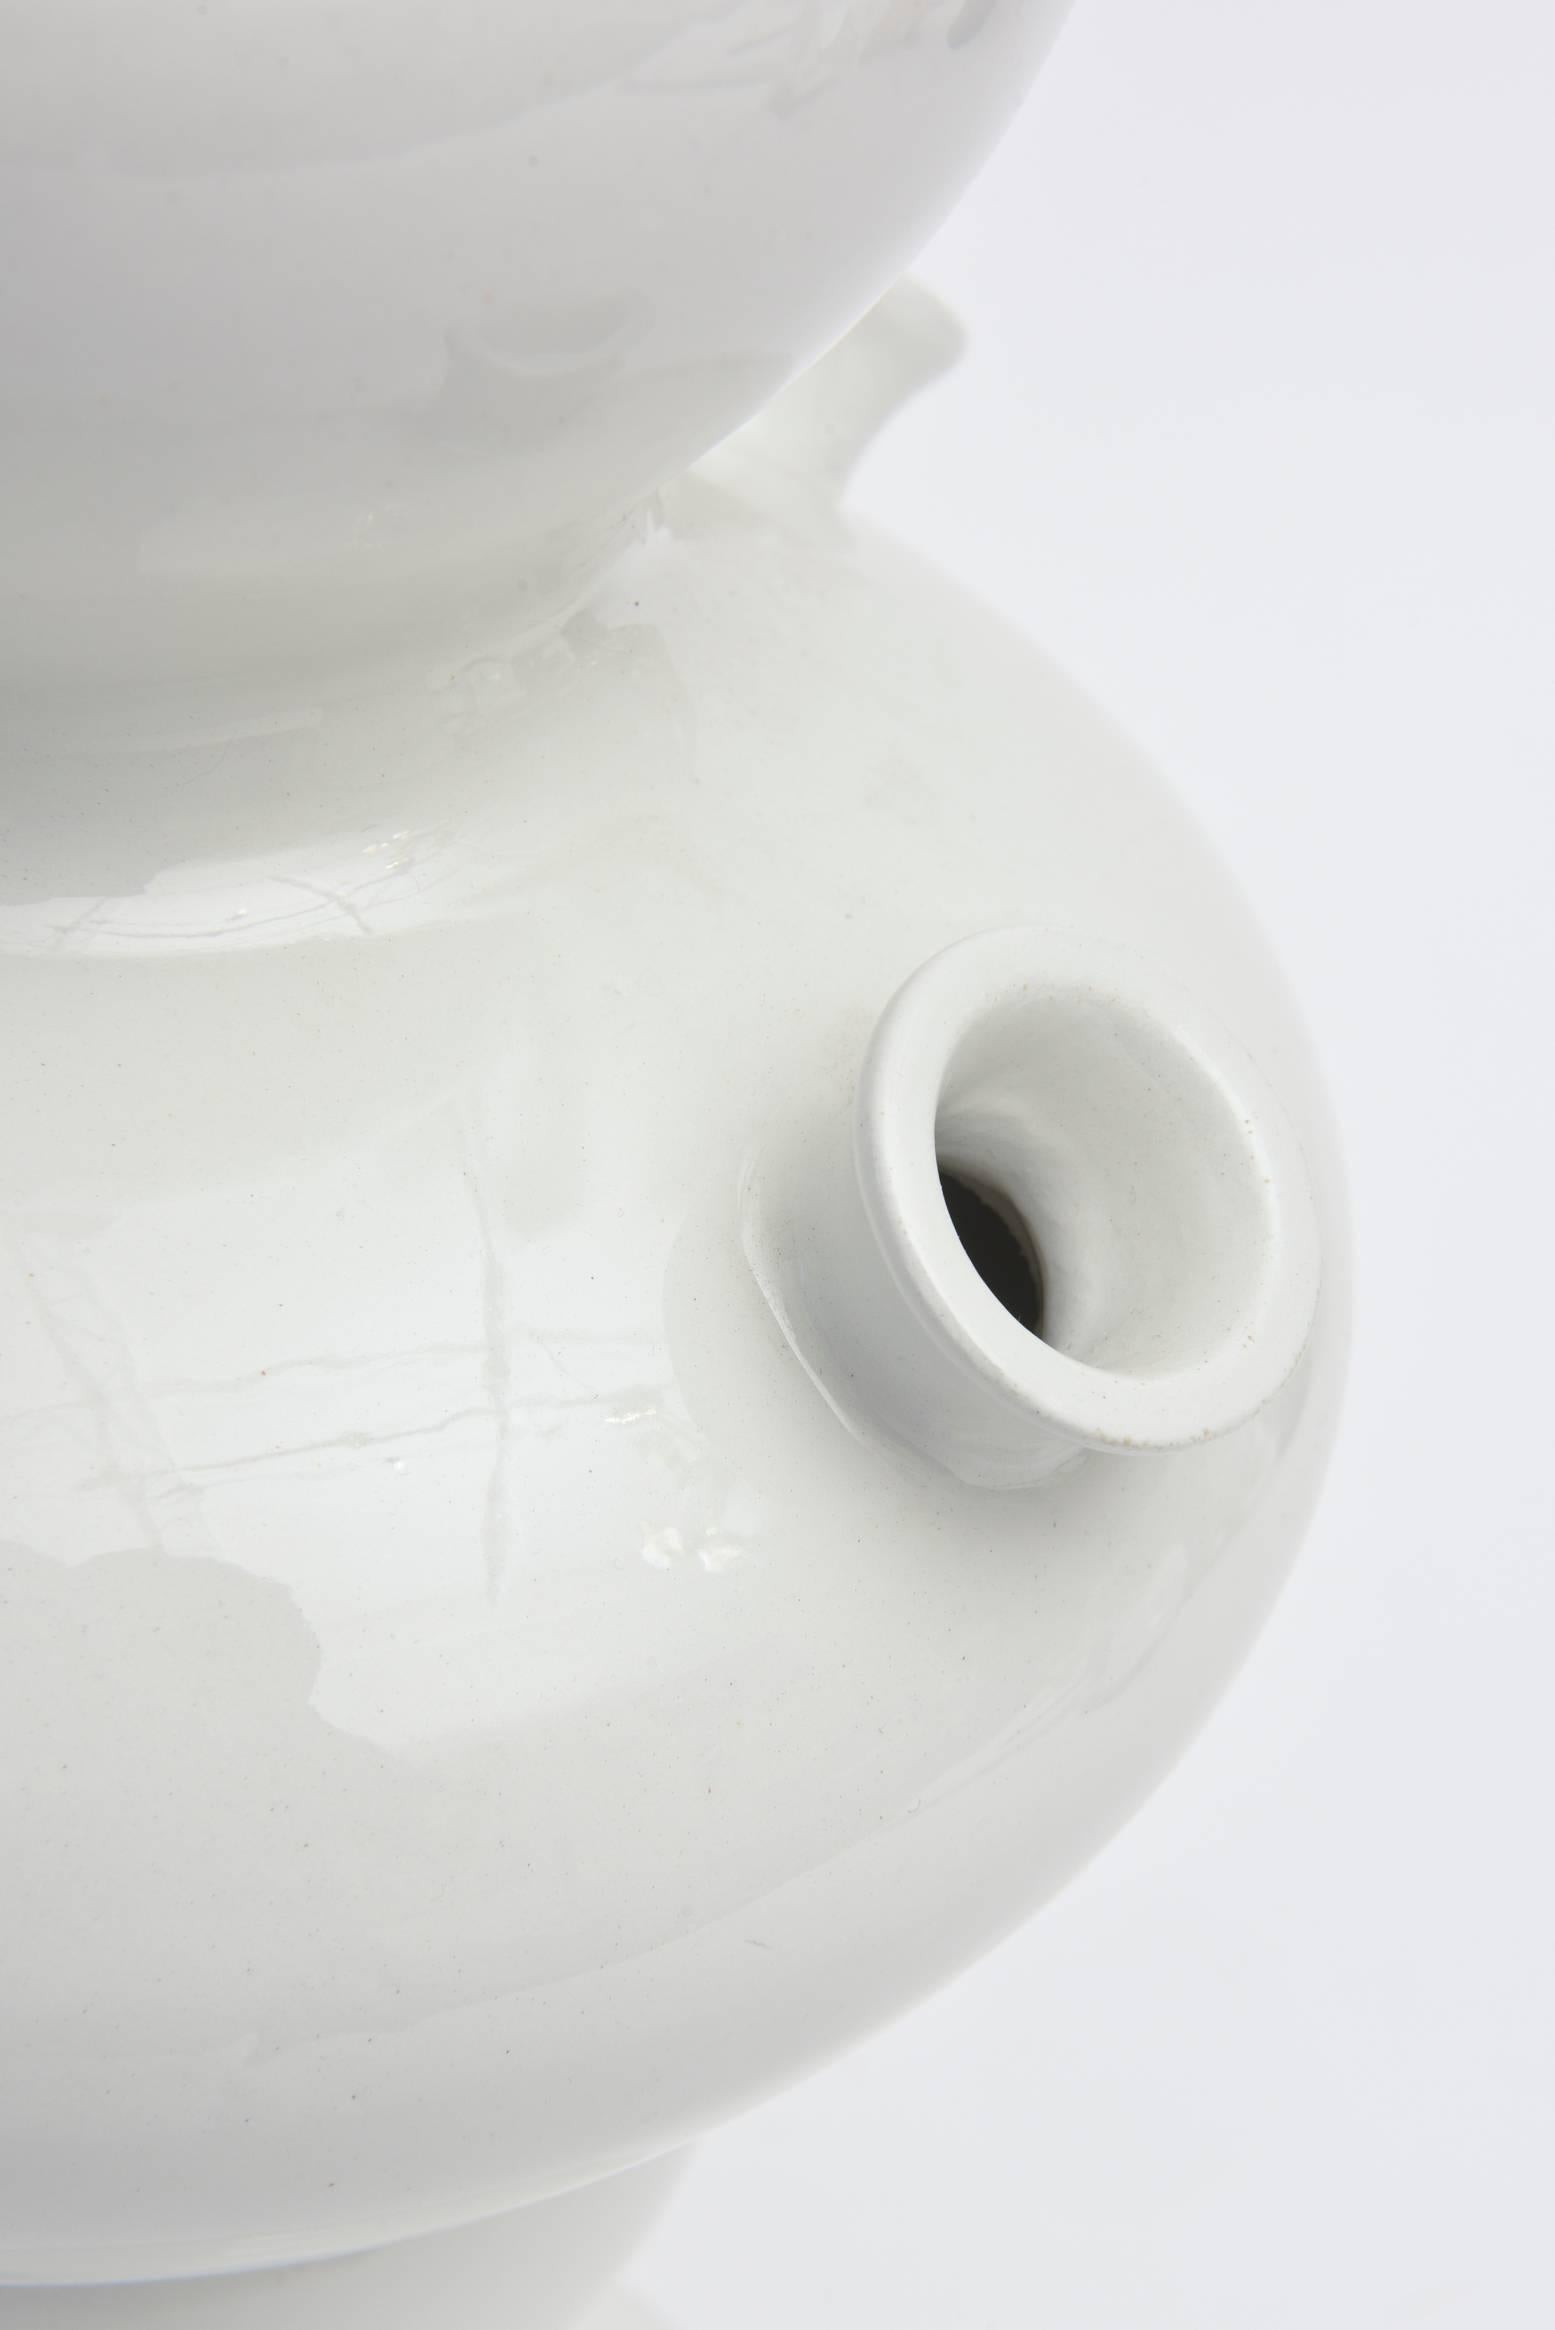 Sculptural Sensual Italian Ceramic Vessel, Vase or Object 2